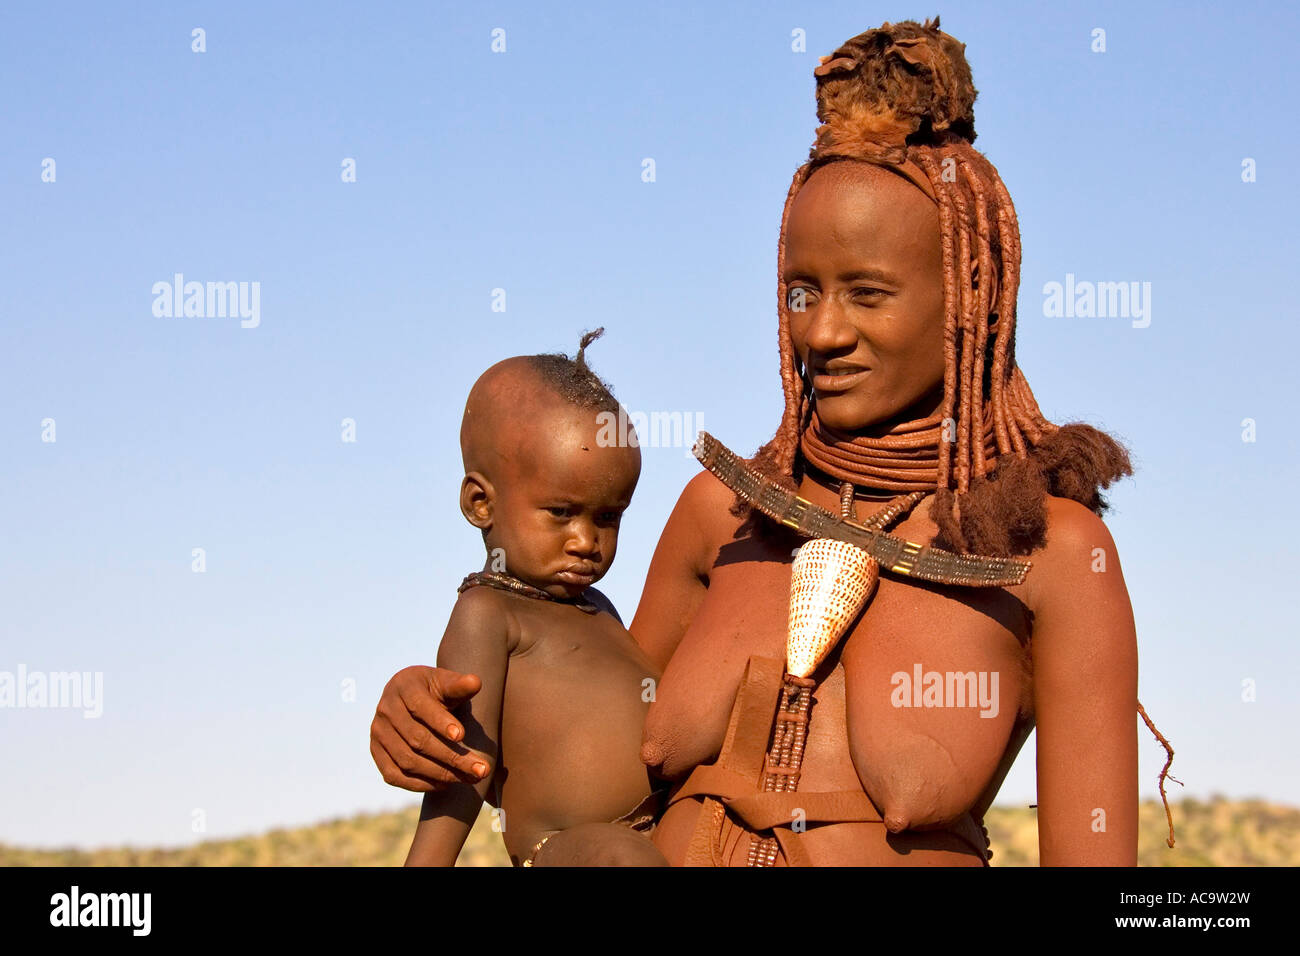 Himbawoman with baby, Kaokoveld, Namibia, Africa Stock Photo